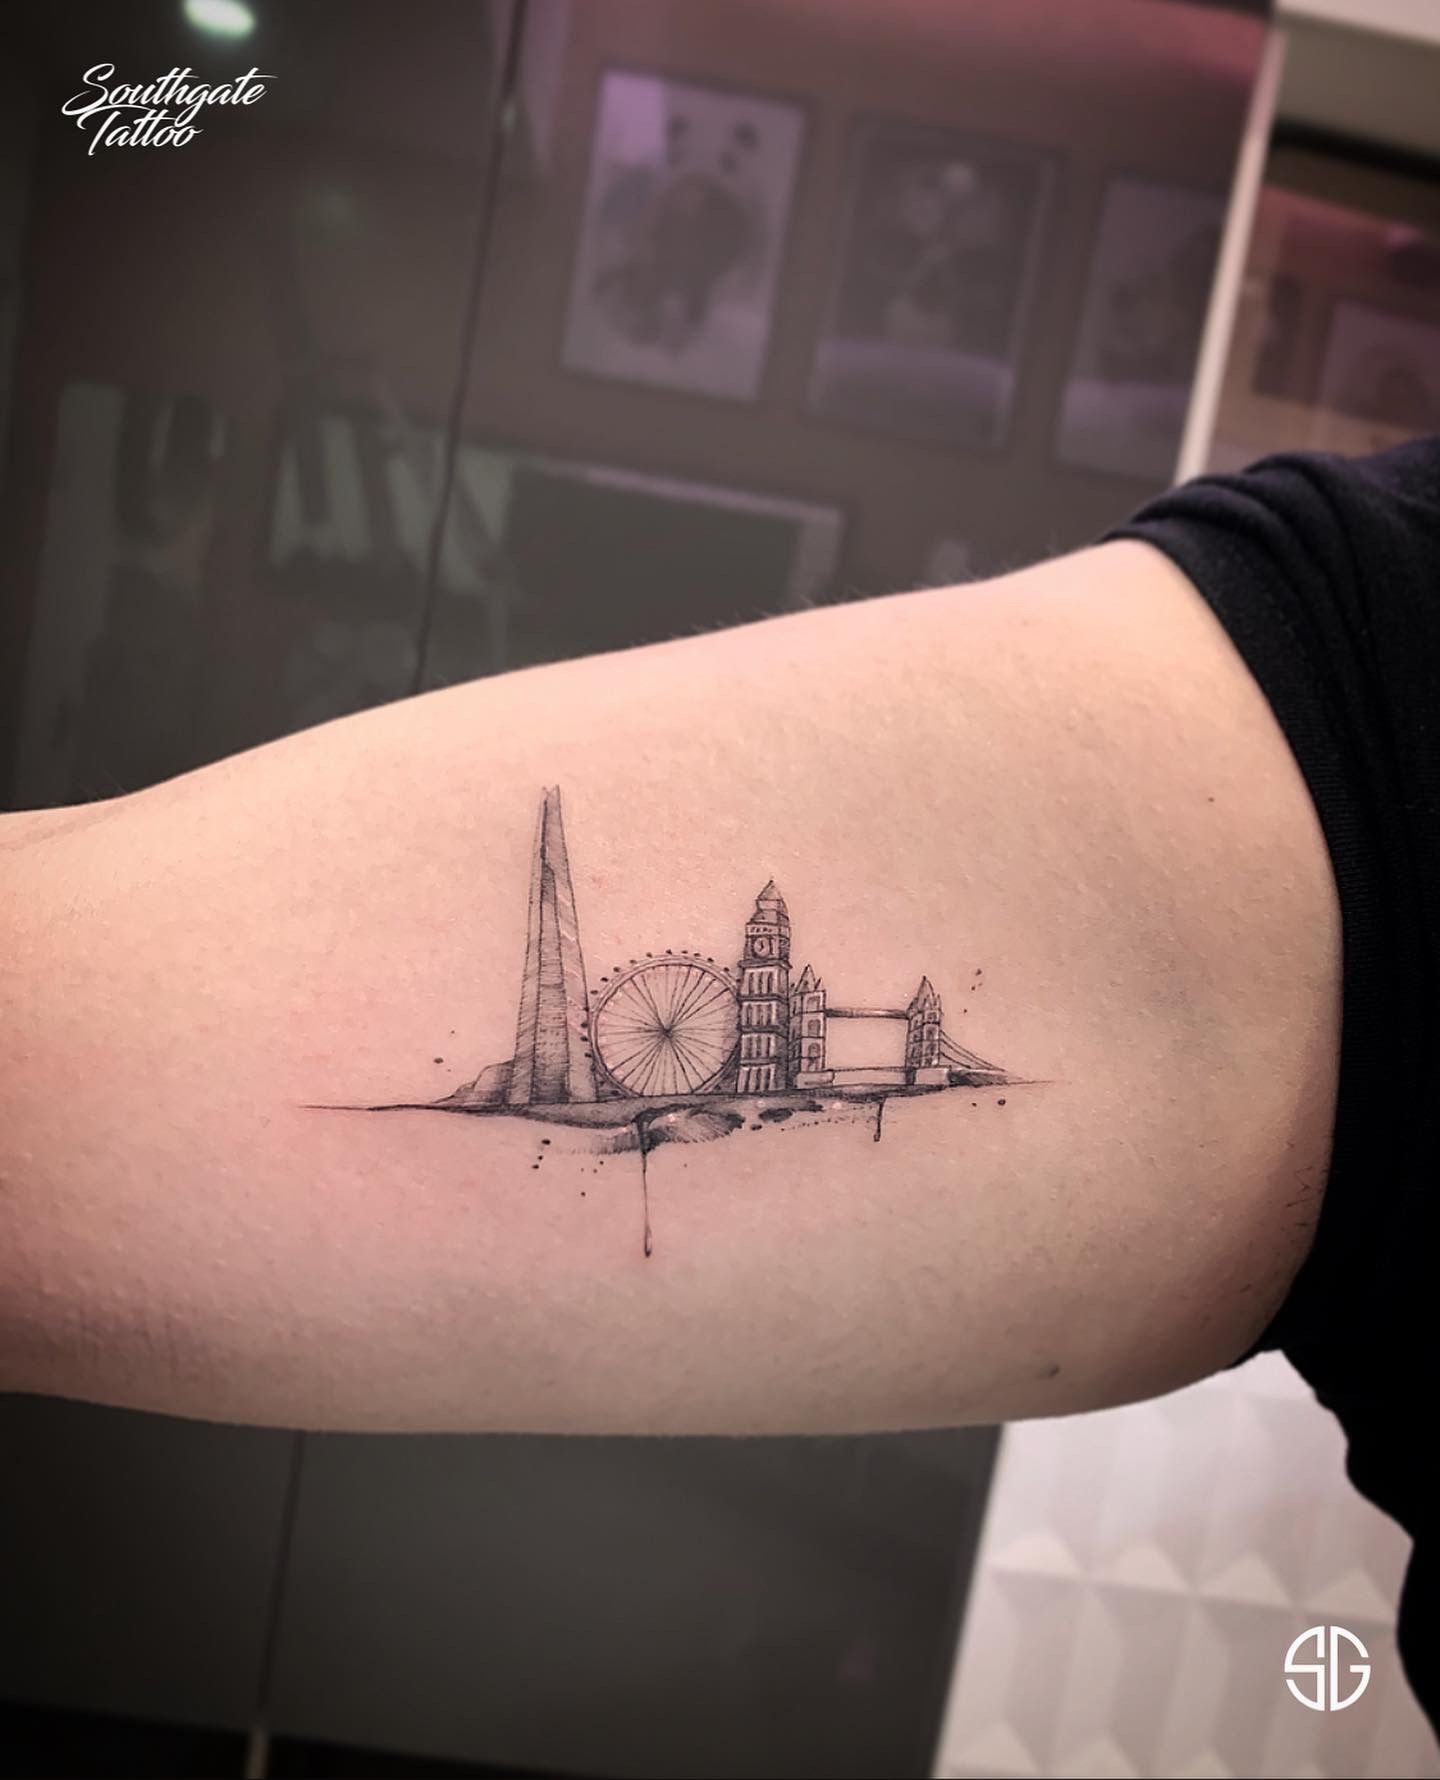 Healed old London tattoo by DorianBakalov on DeviantArt